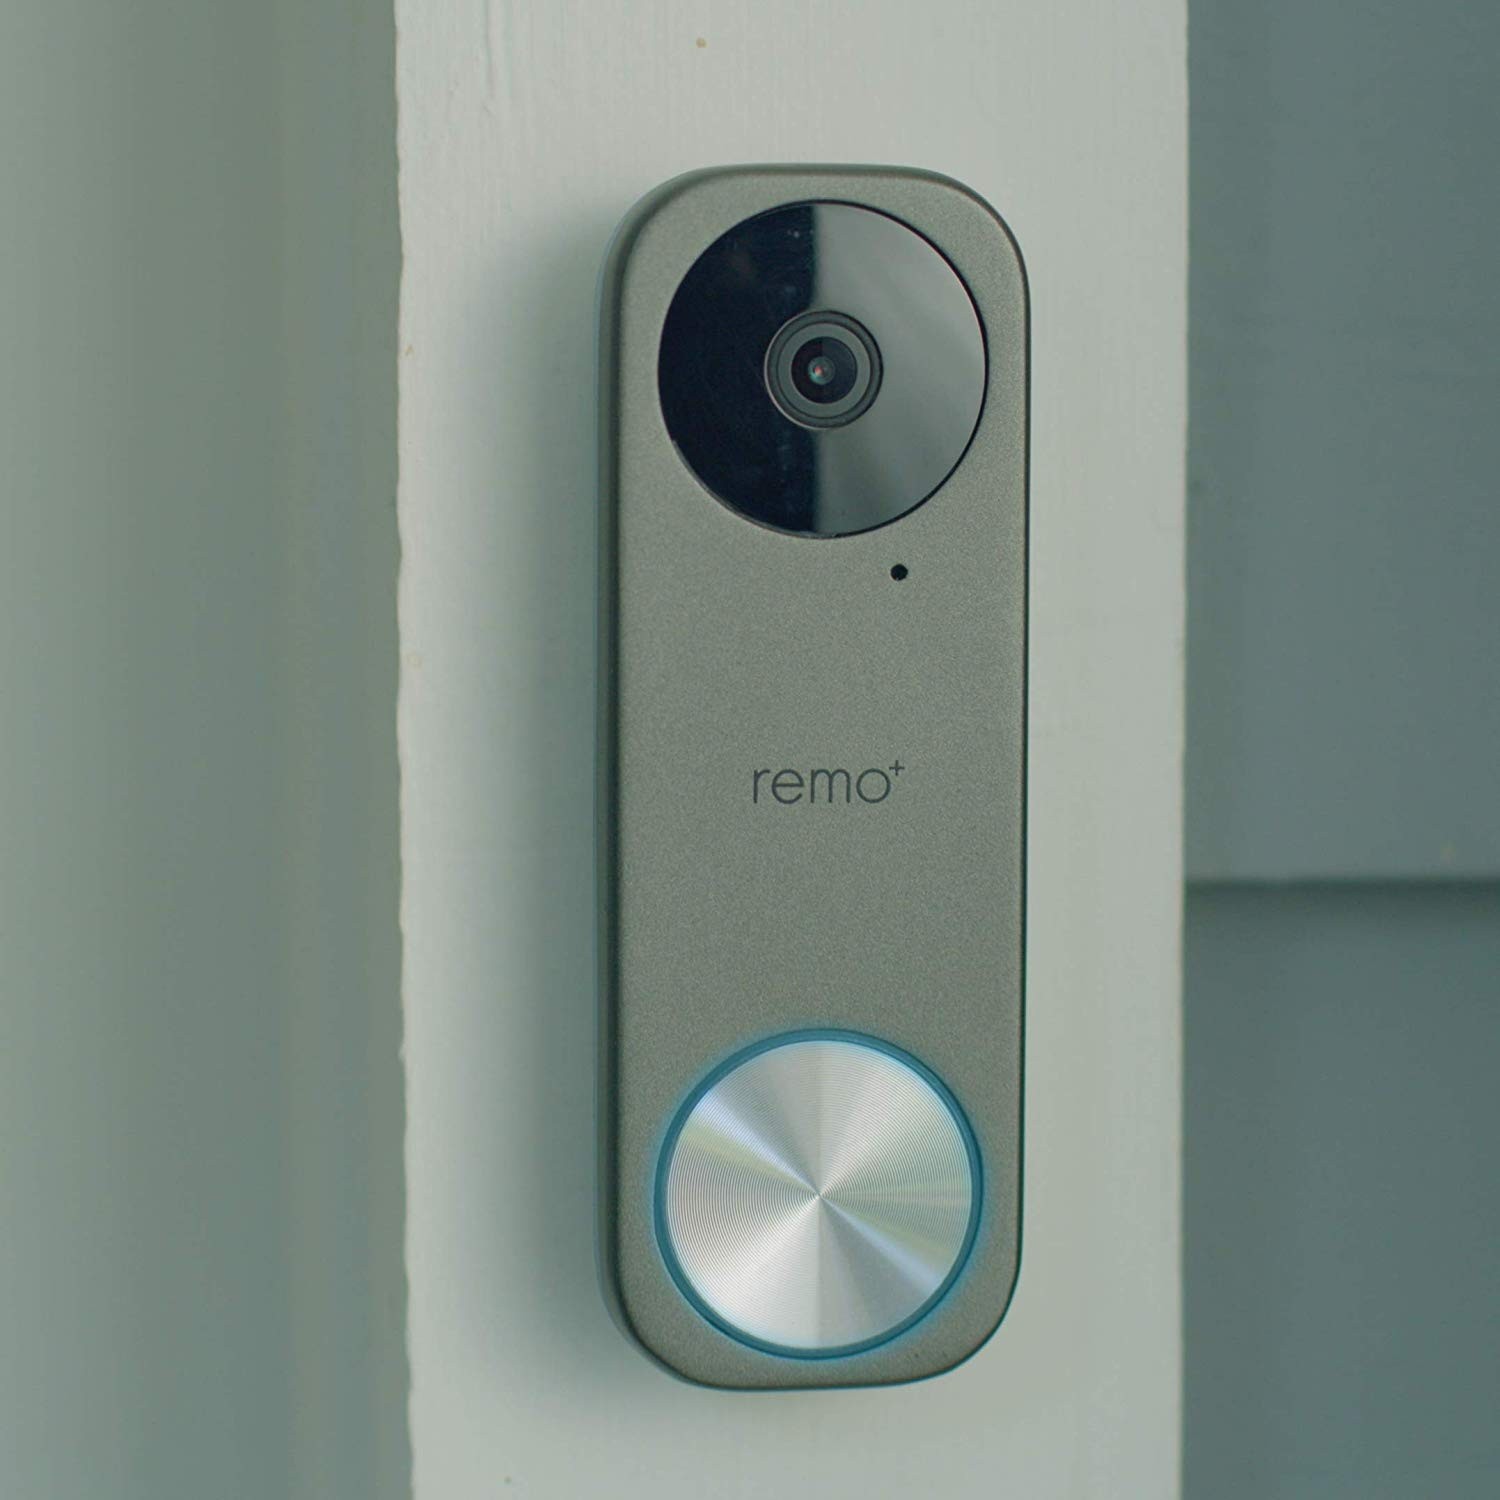 Remobell S Fast Responding Doorbell Push Button